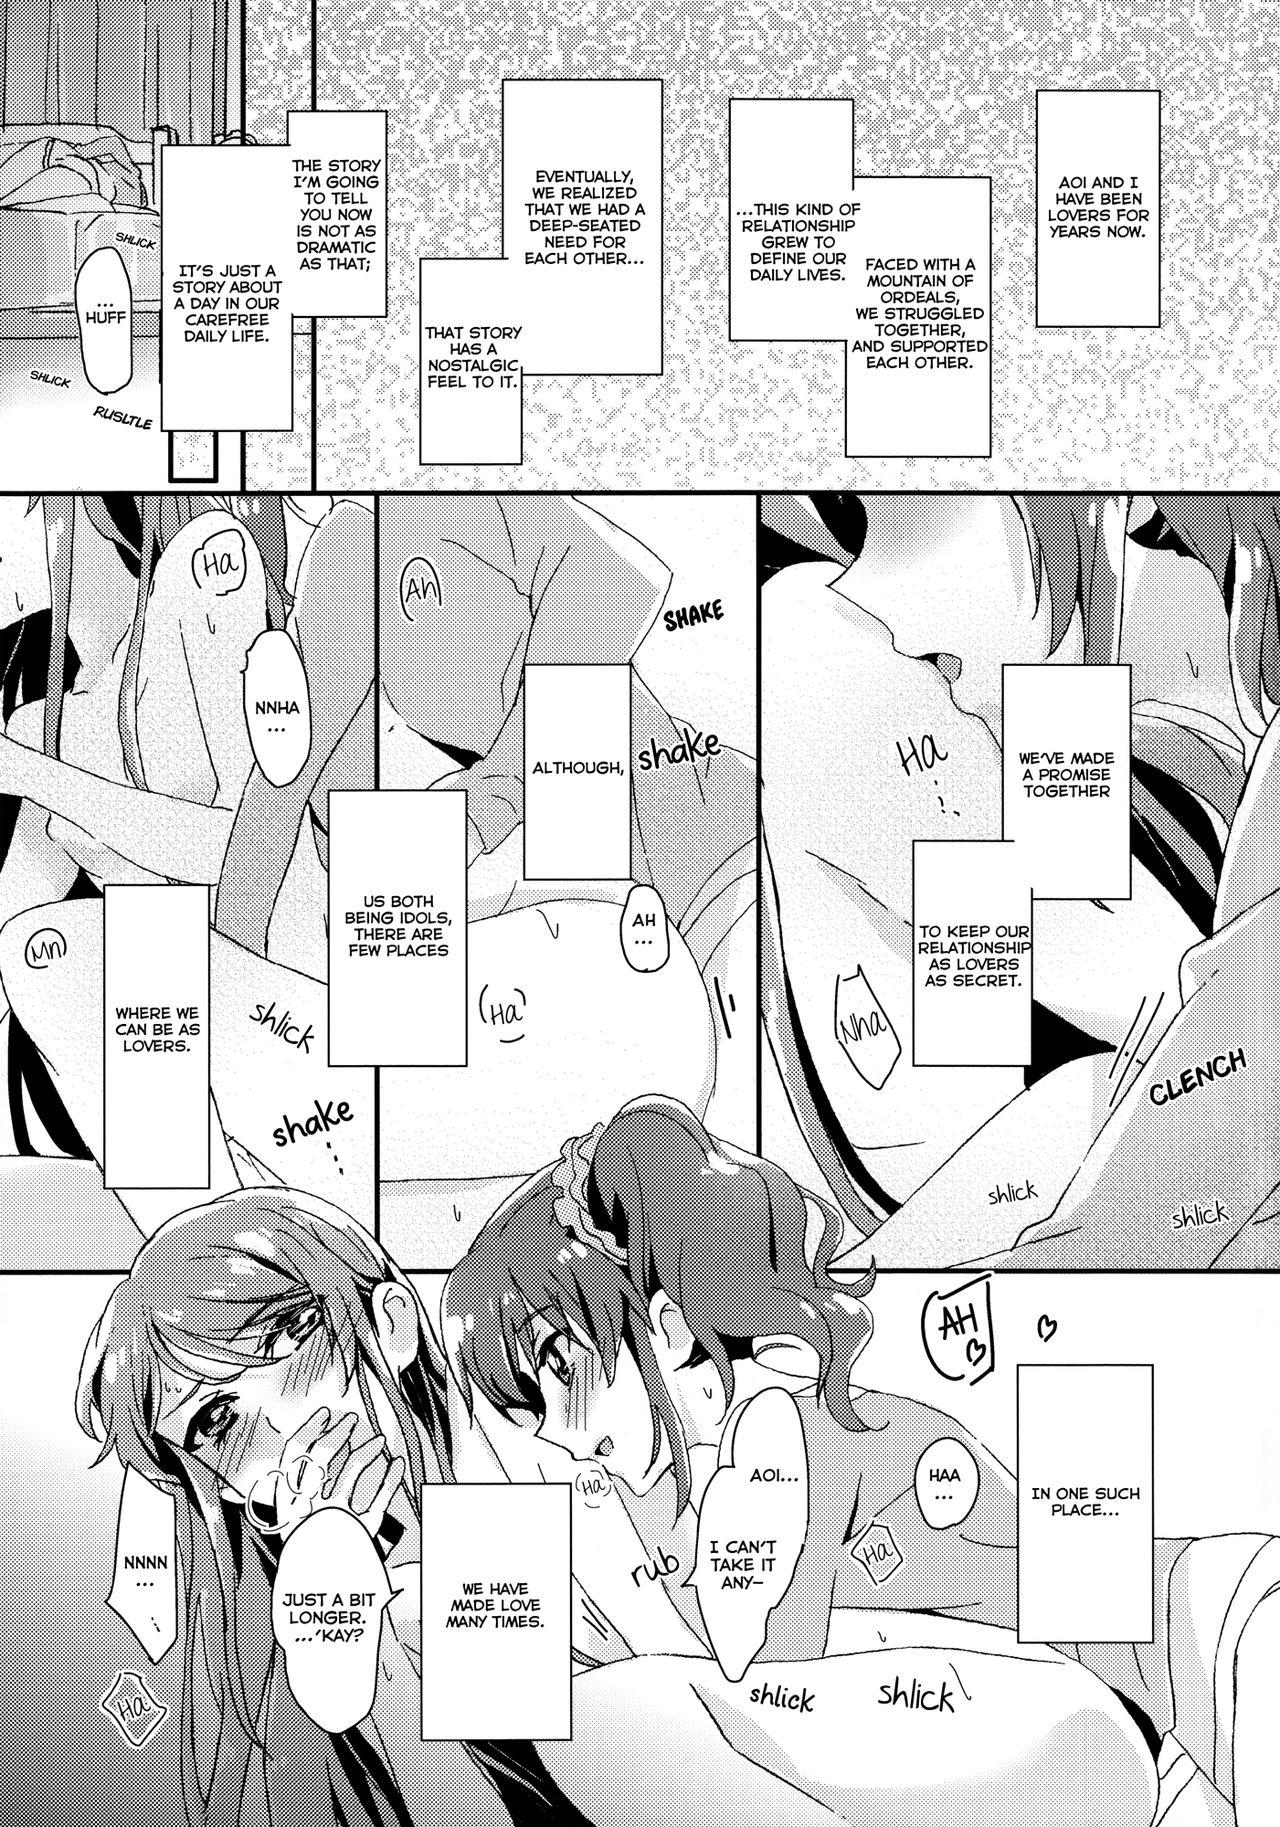 Tanga Tomorrow's schedule - Aikatsu Sex Tape - Page 2